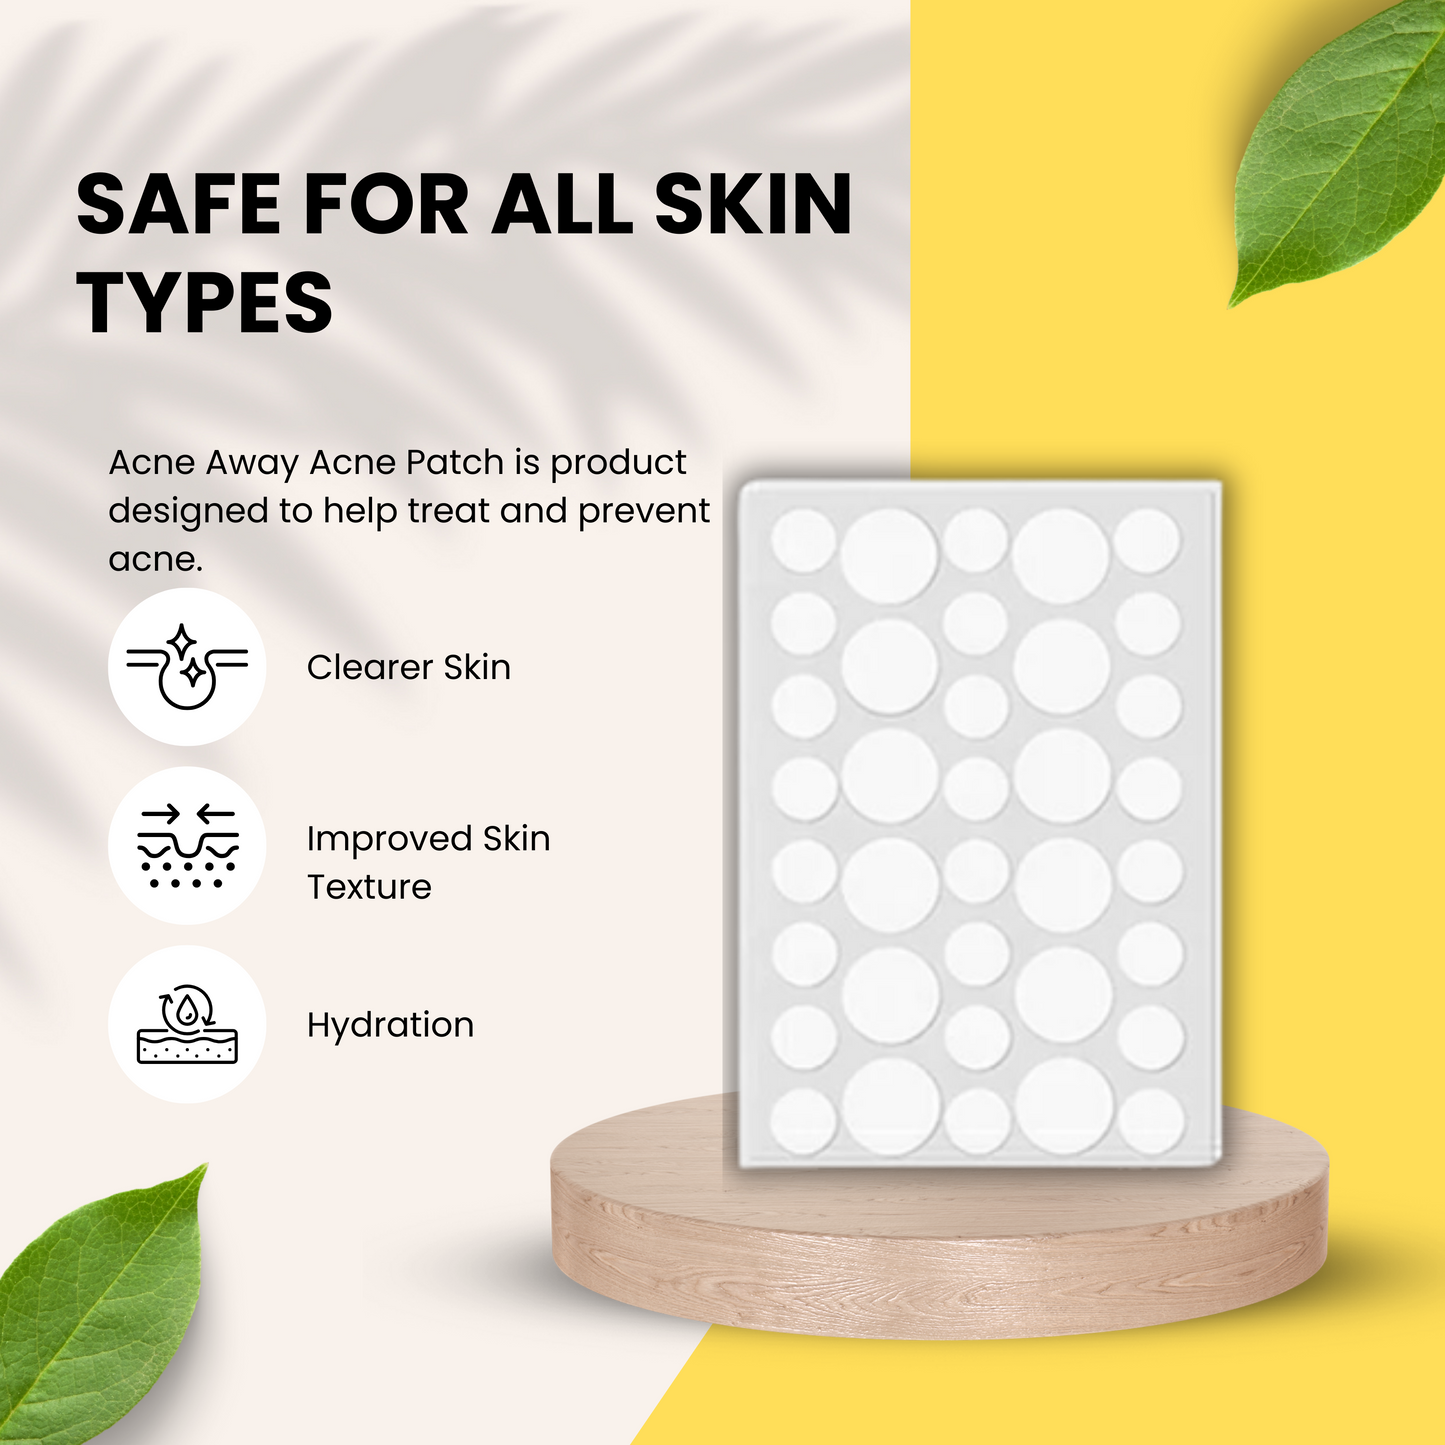 Safe for all skin types.